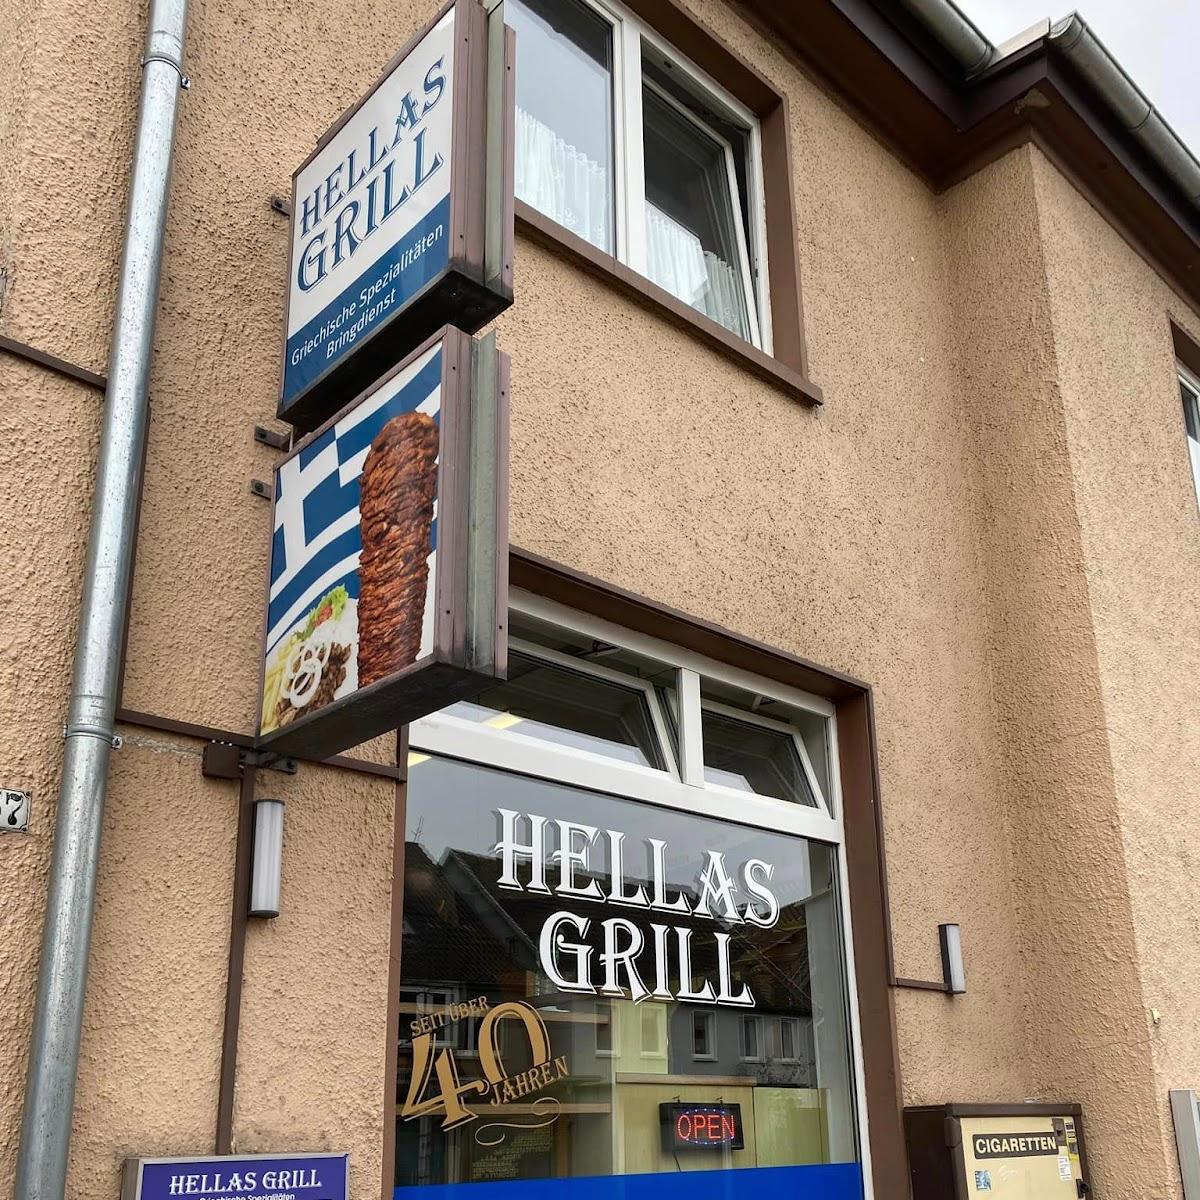 Restaurant "Hellas Grill" in Bad Pyrmont